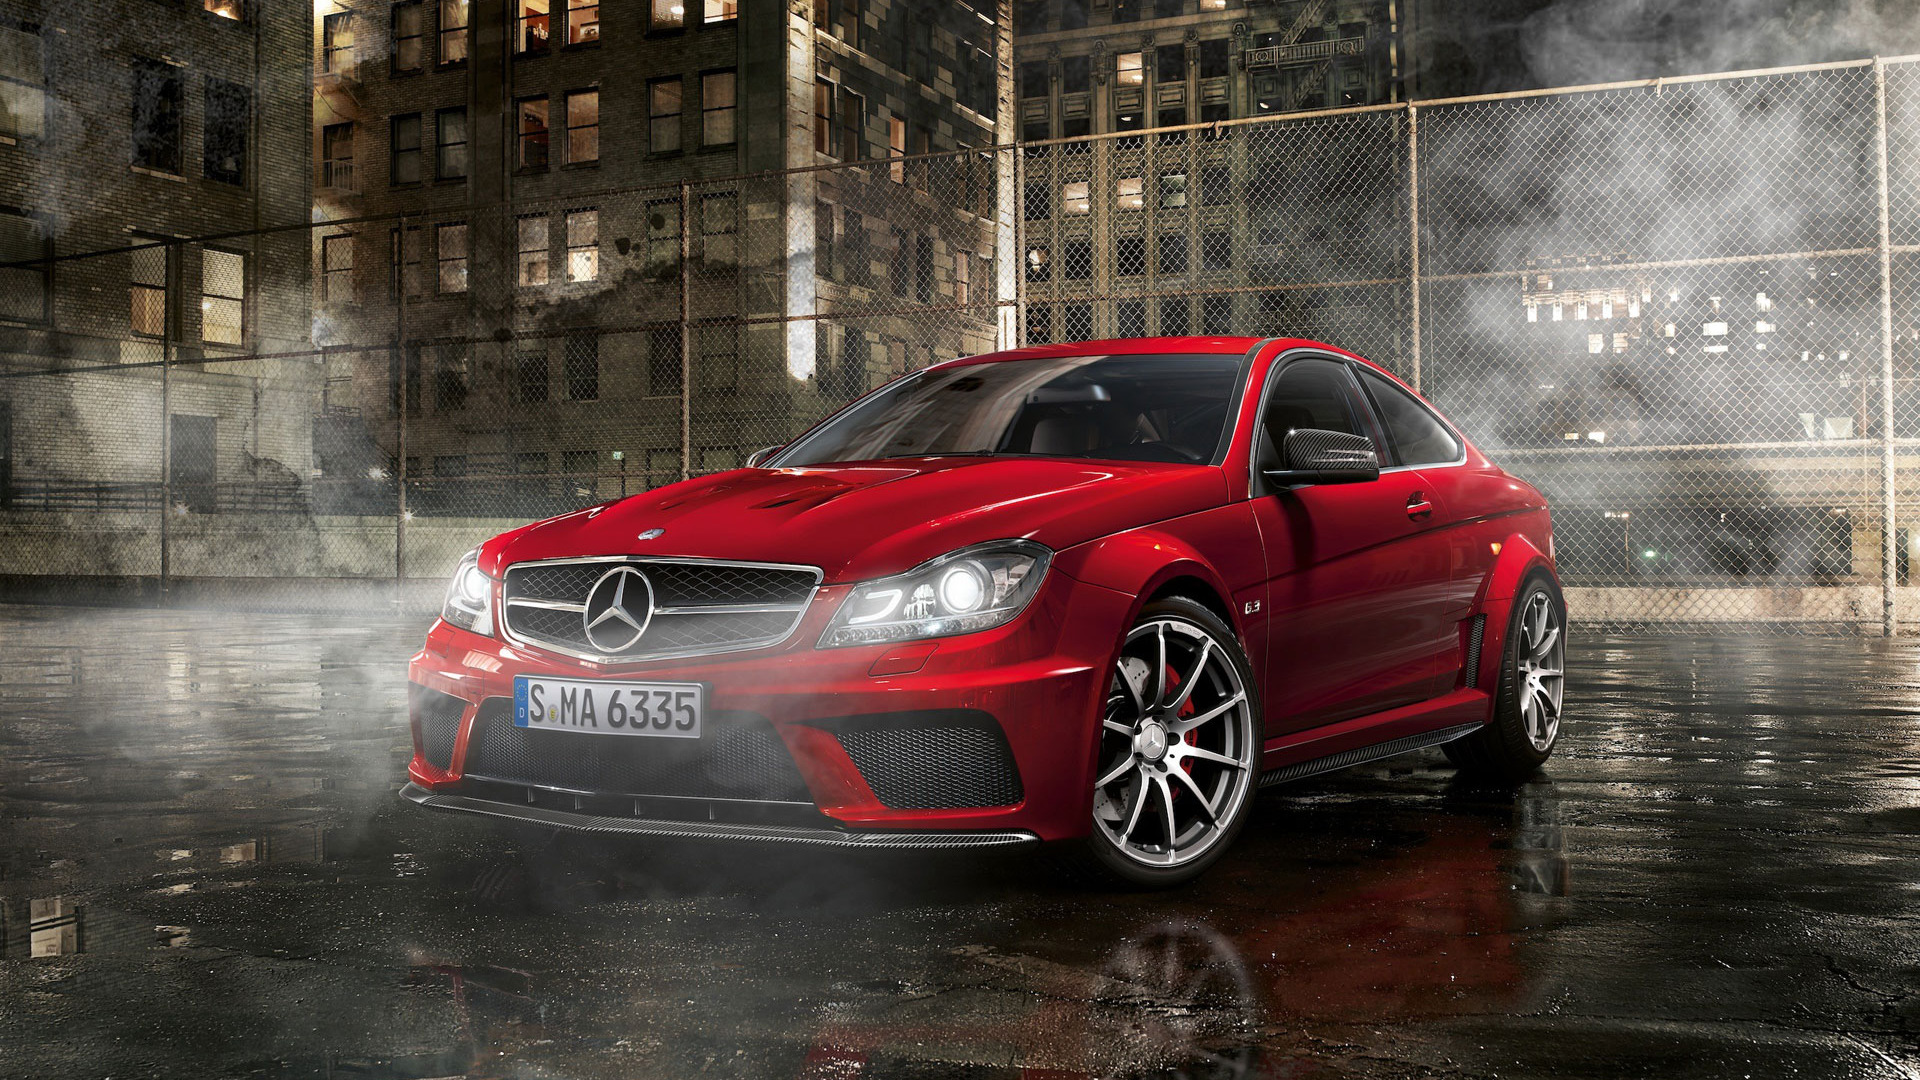  Download Red Mercedes Benz C63 Amg Desktop Wallpaper HD Wide by 